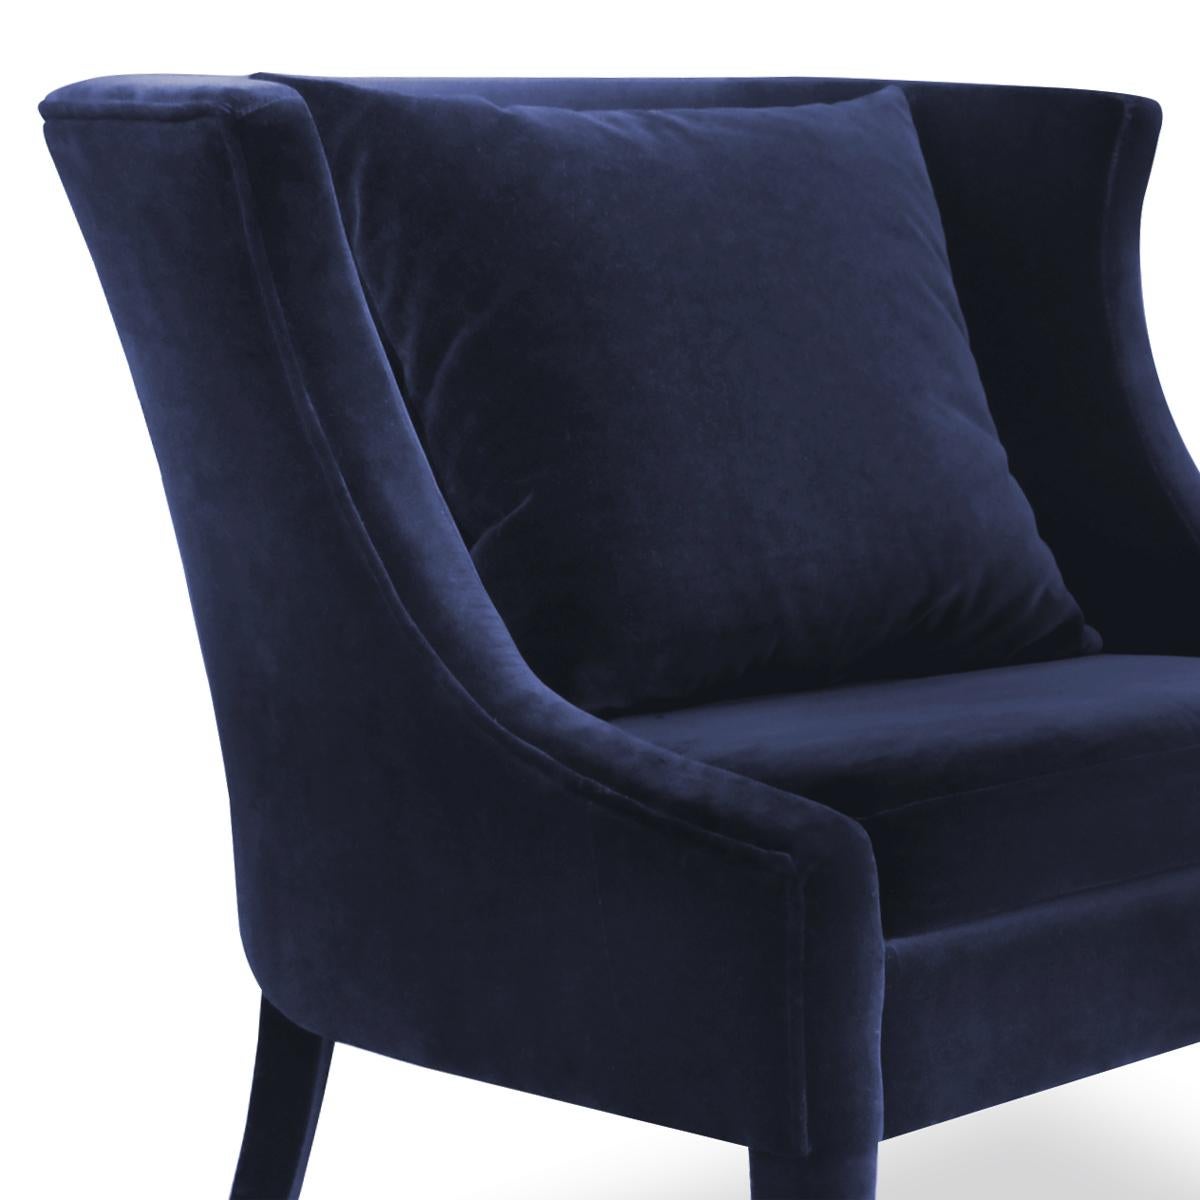 Portuguese Hornet Armchair with Deep Blue Velvet Fabric